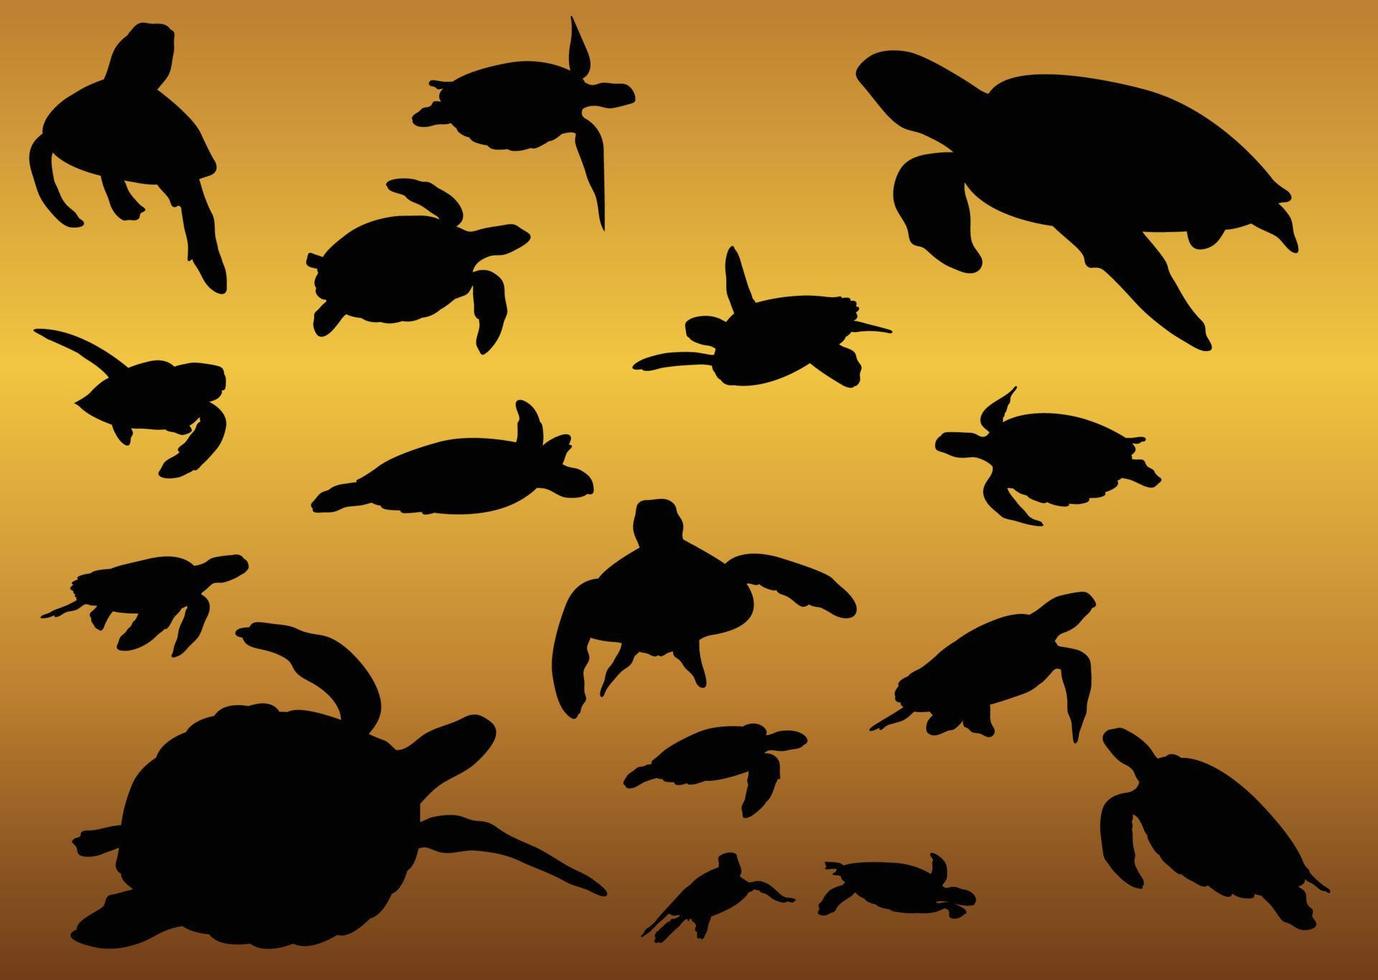 Colección de silueta de tortuga animal en diferentes poses. vector